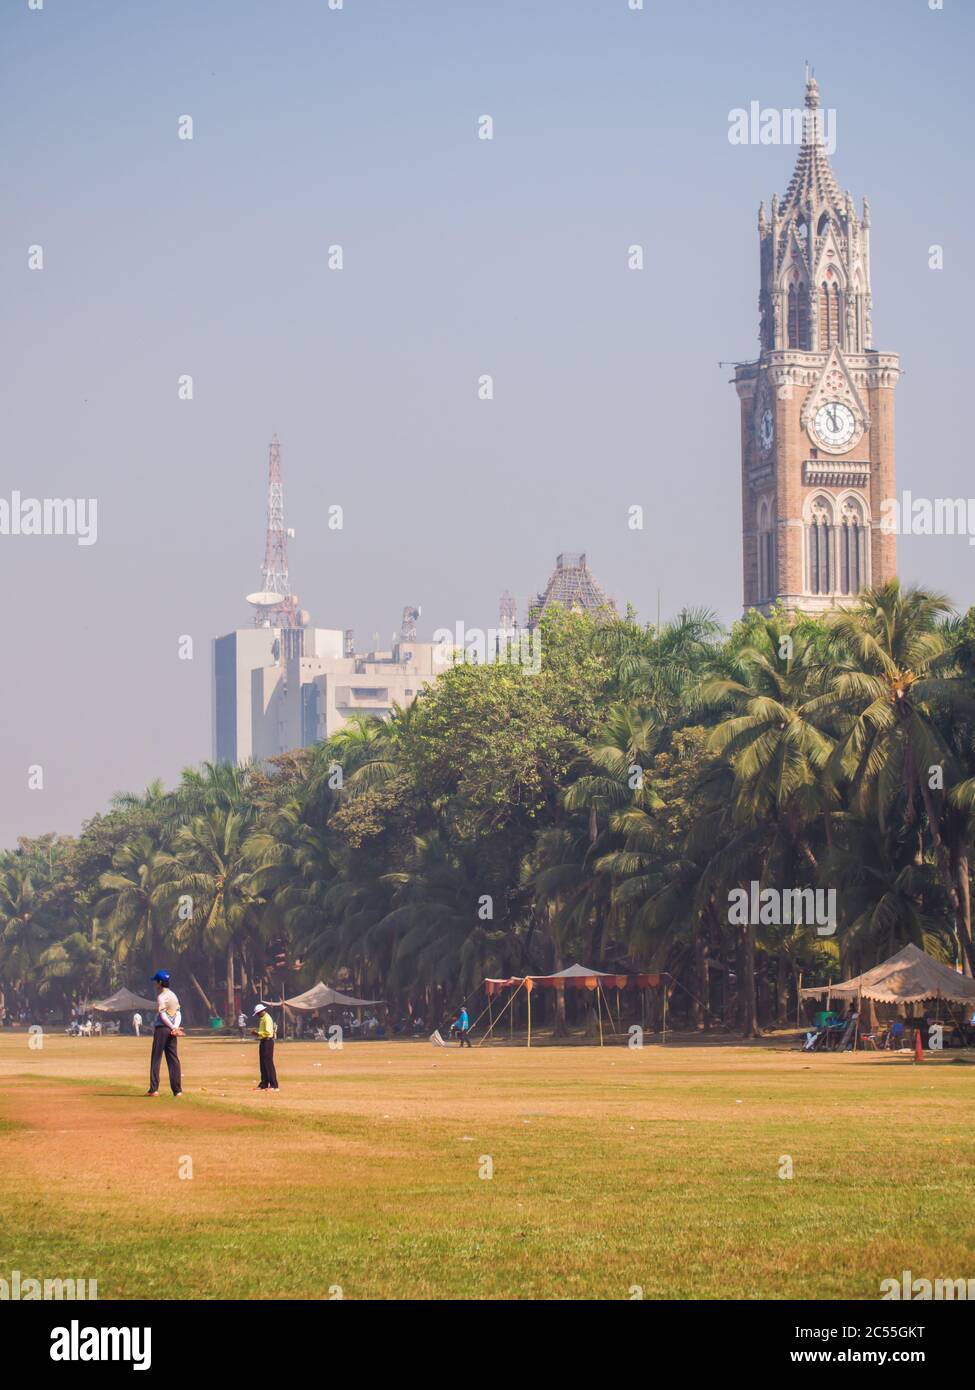 Mumbai, India - 5 december 2018: People playing cricket in the central park at Mumbai. Stock Photo